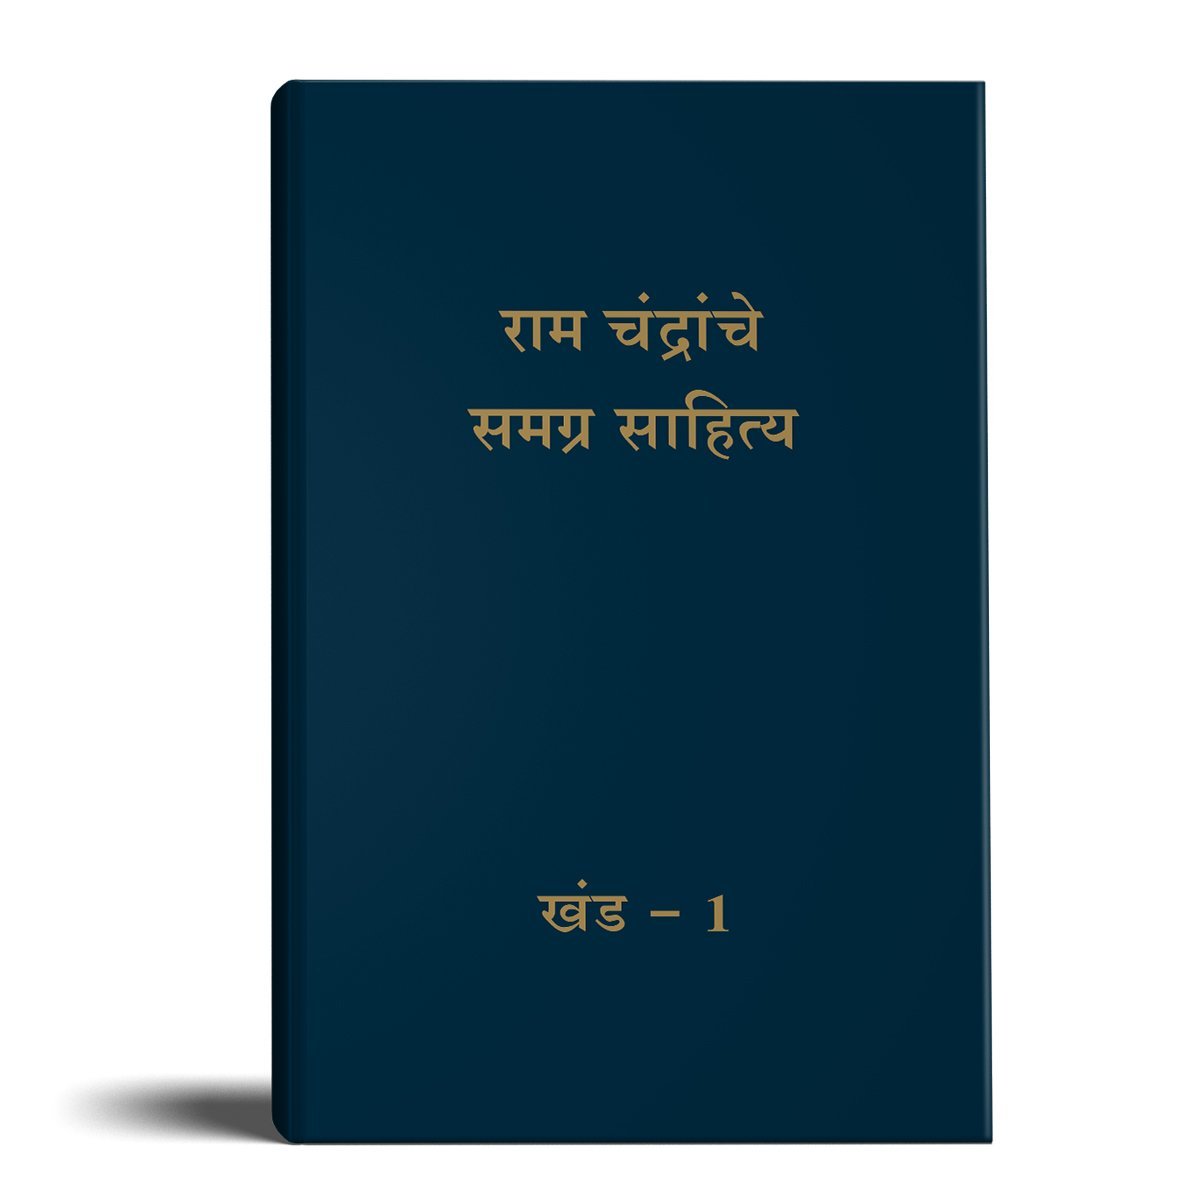 Complete Works of Ram Chandra (Babuji) - Volume 1 - hfnl!fe